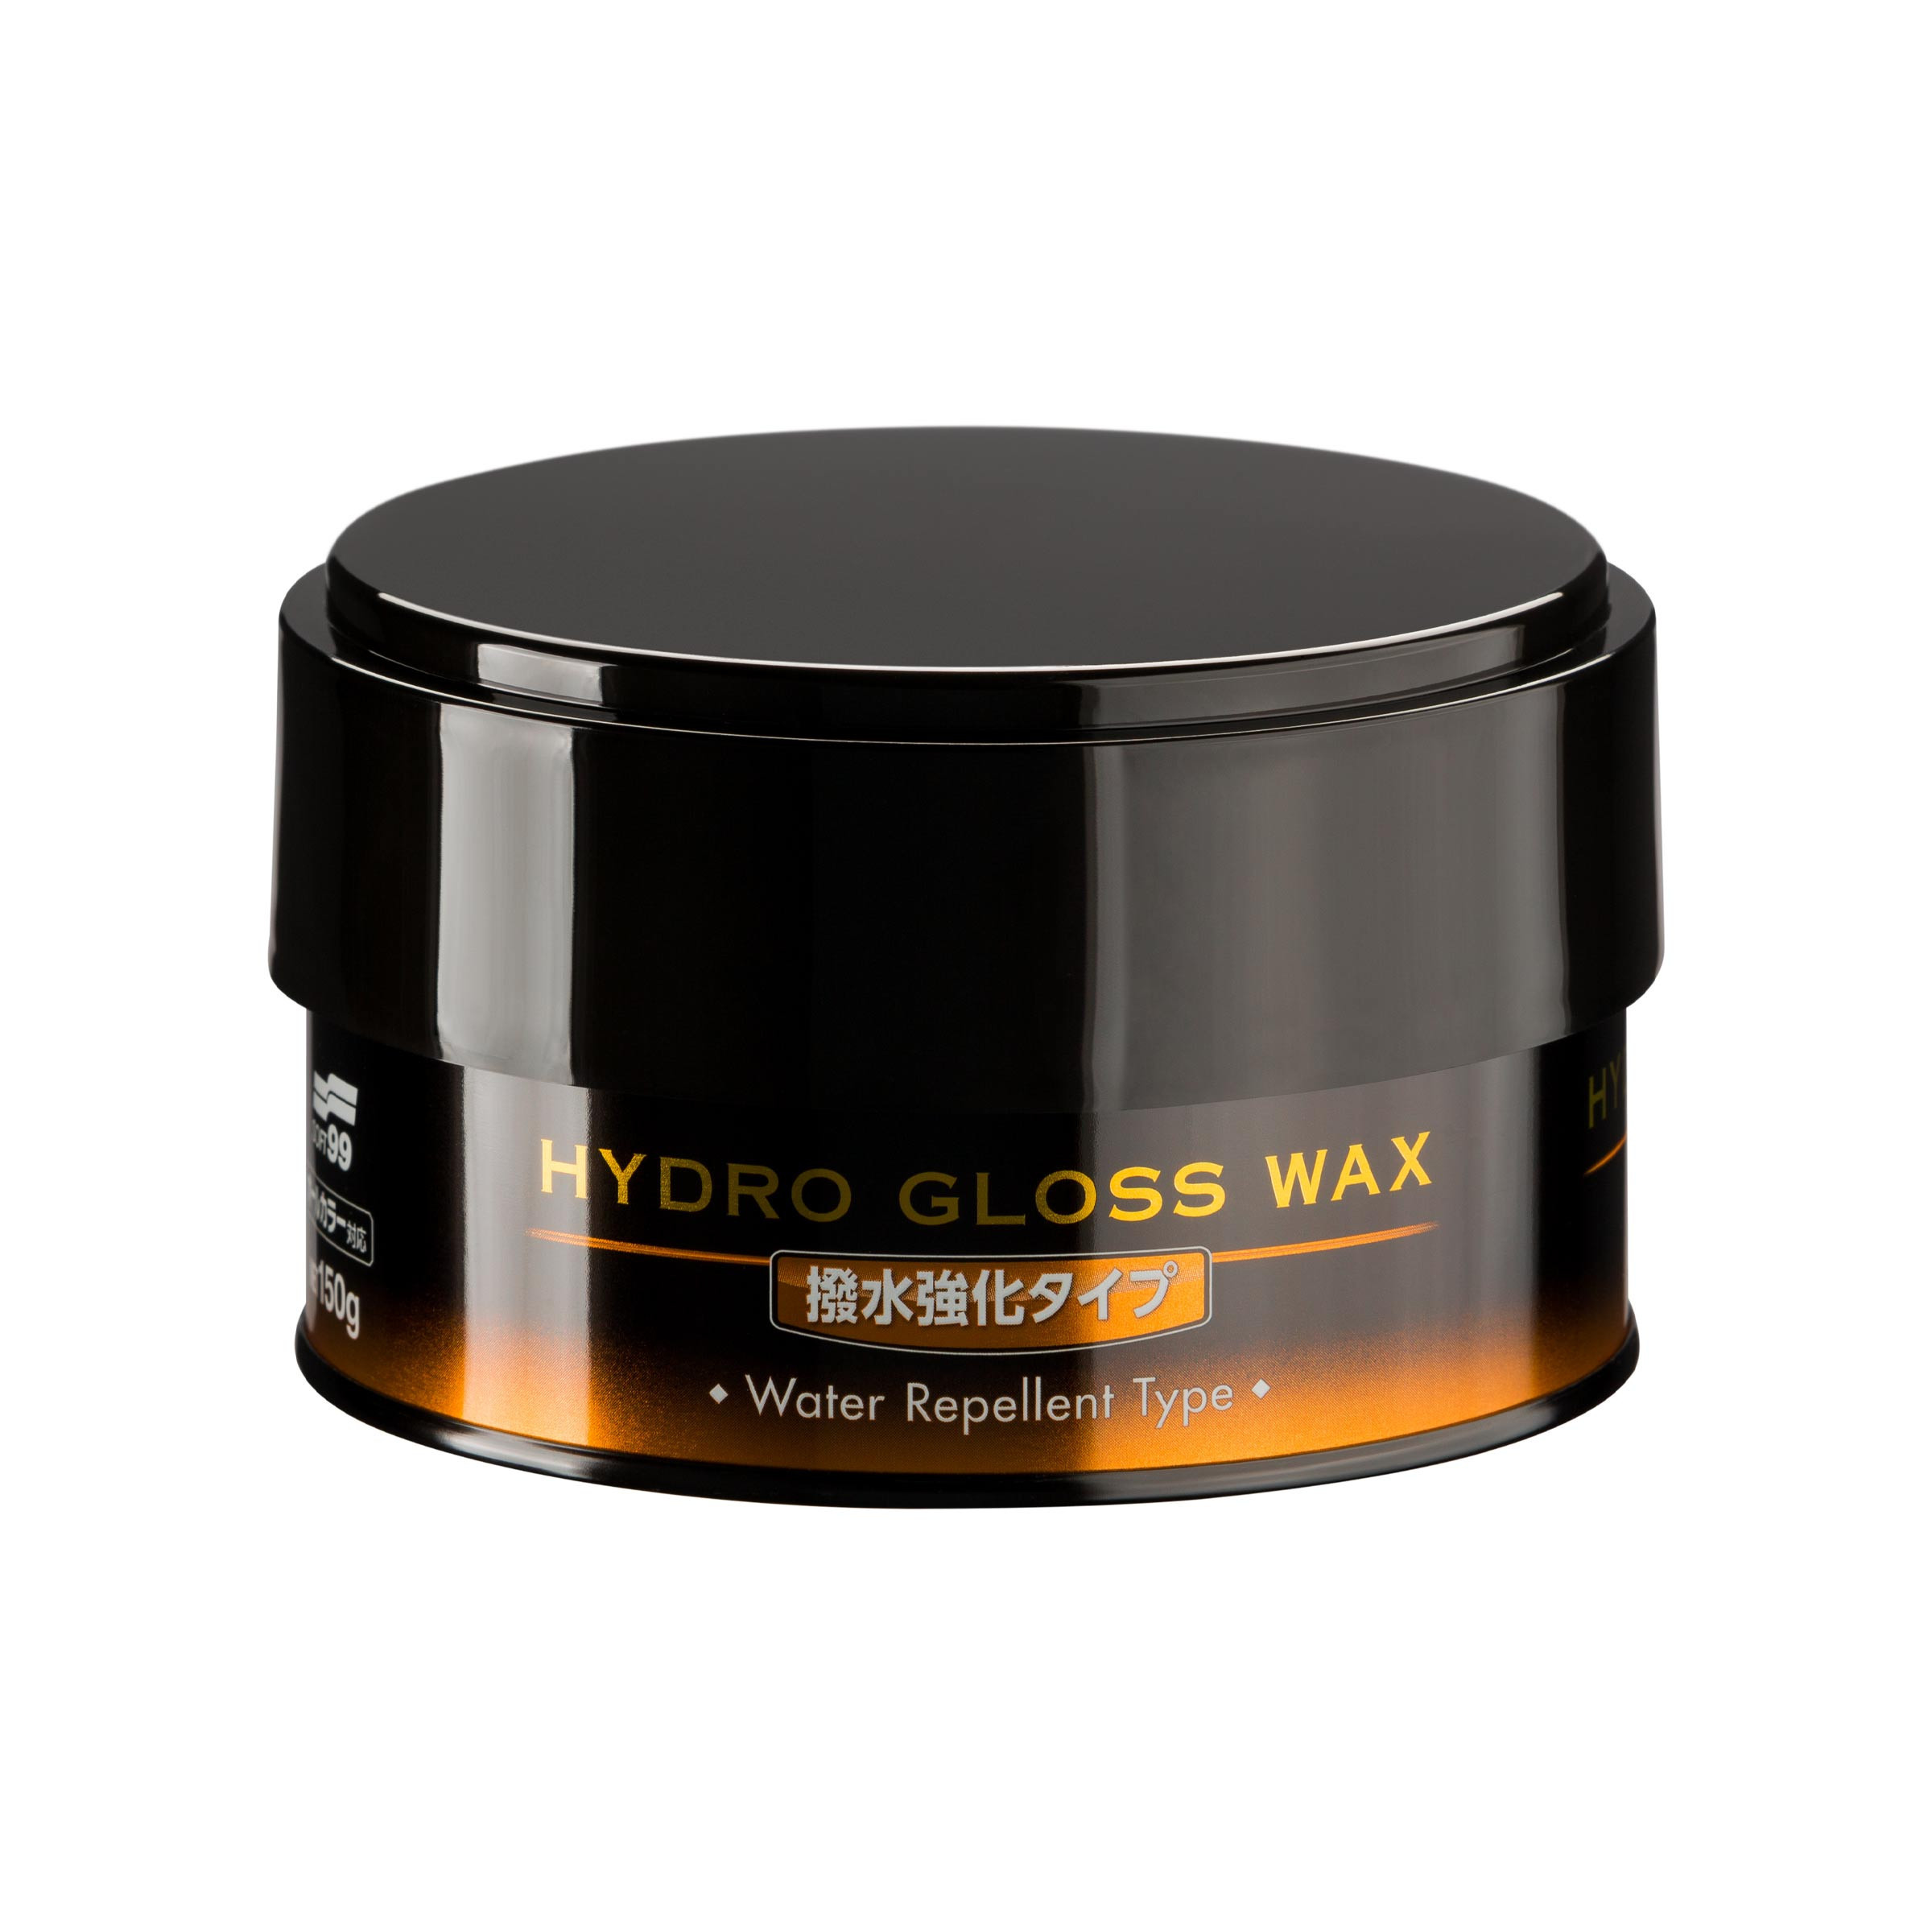 Hydro Gloss Wax Water Repellent, weiches Autowachs, 150 g